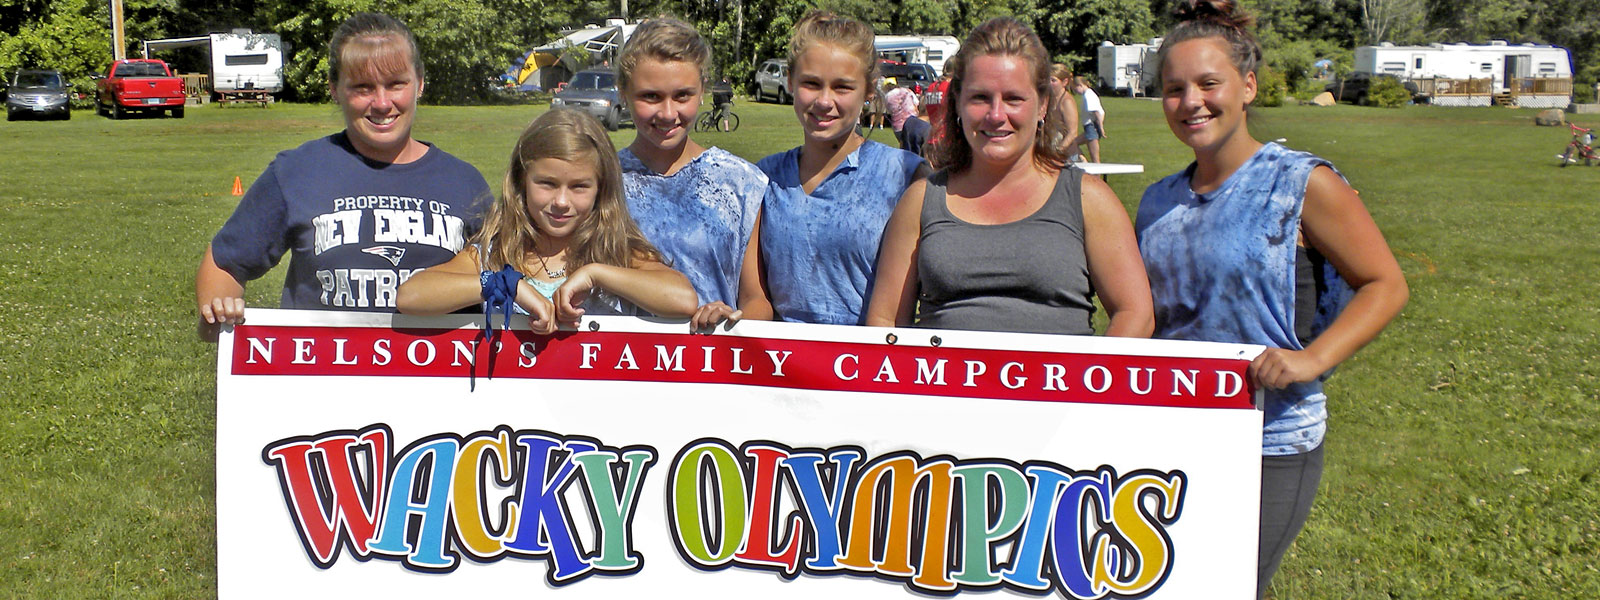 Wacky Olympics at Nelson’s Family Campground